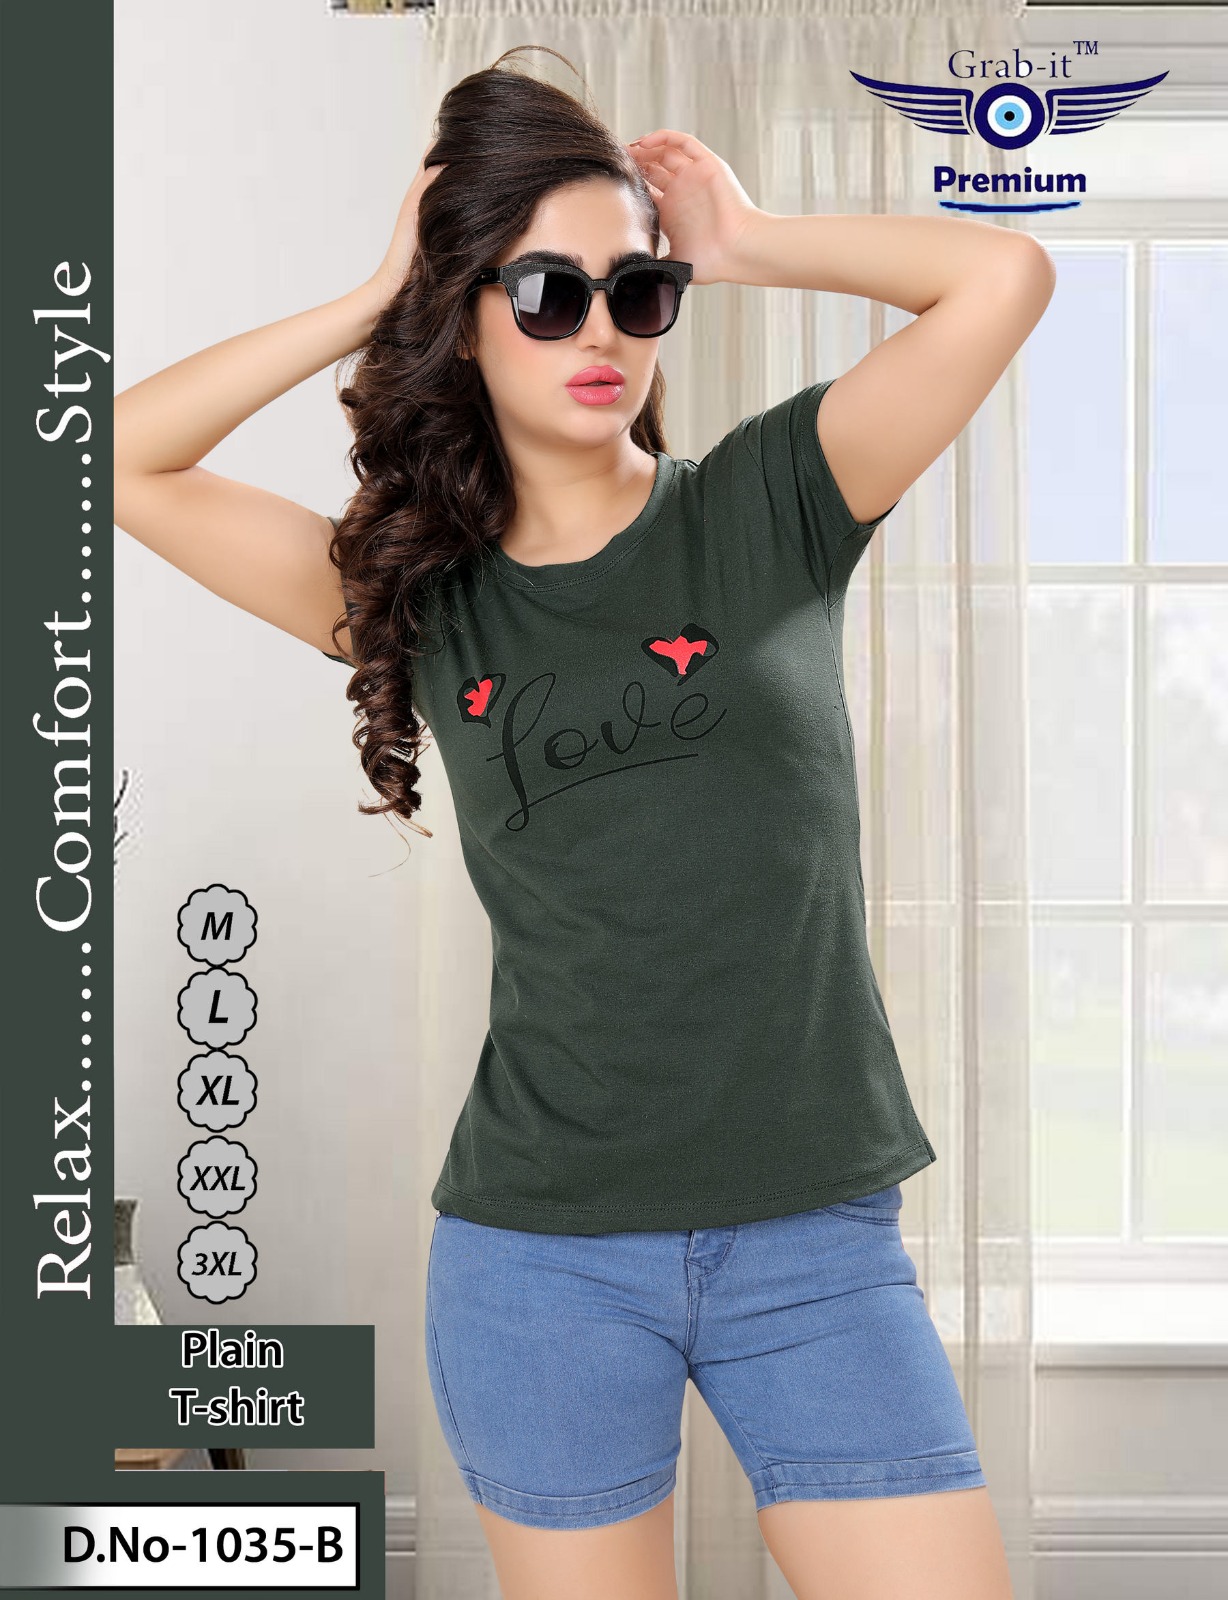 Vol No 1035 B Grab It Women Tshirt Manufacturer Wholesaler